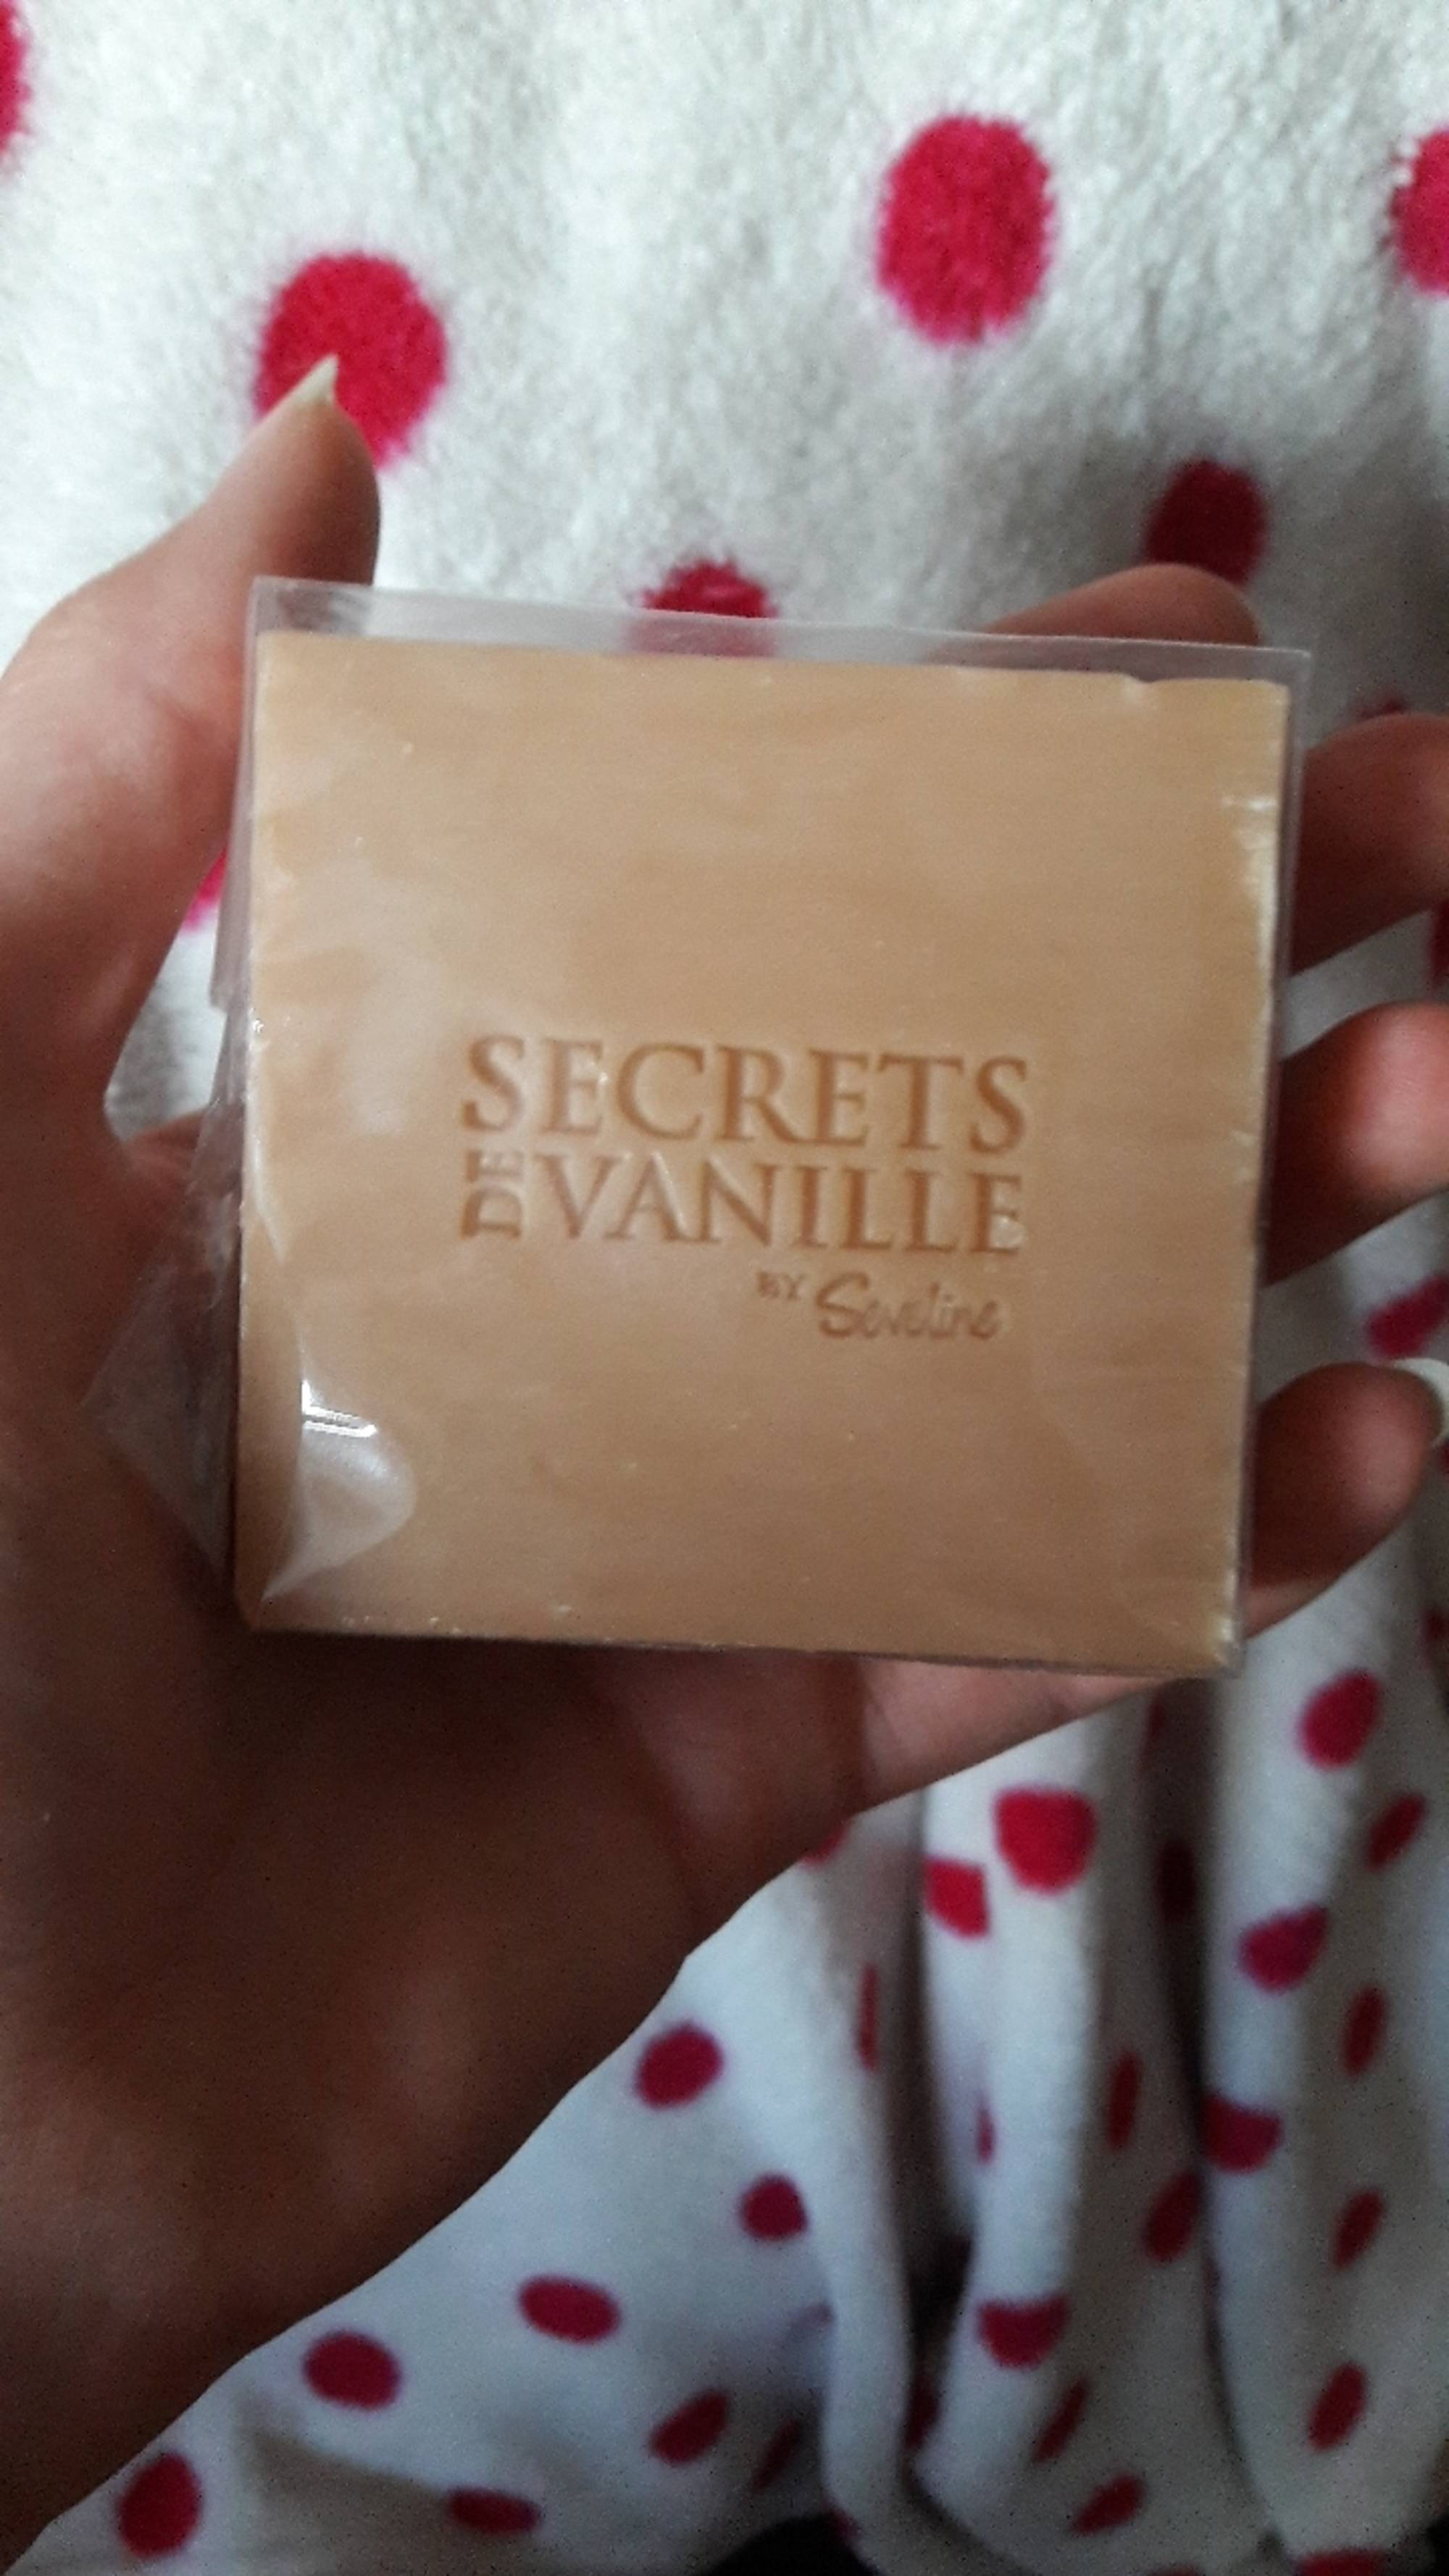 SEVELINE - Secrets de vanille - Savon